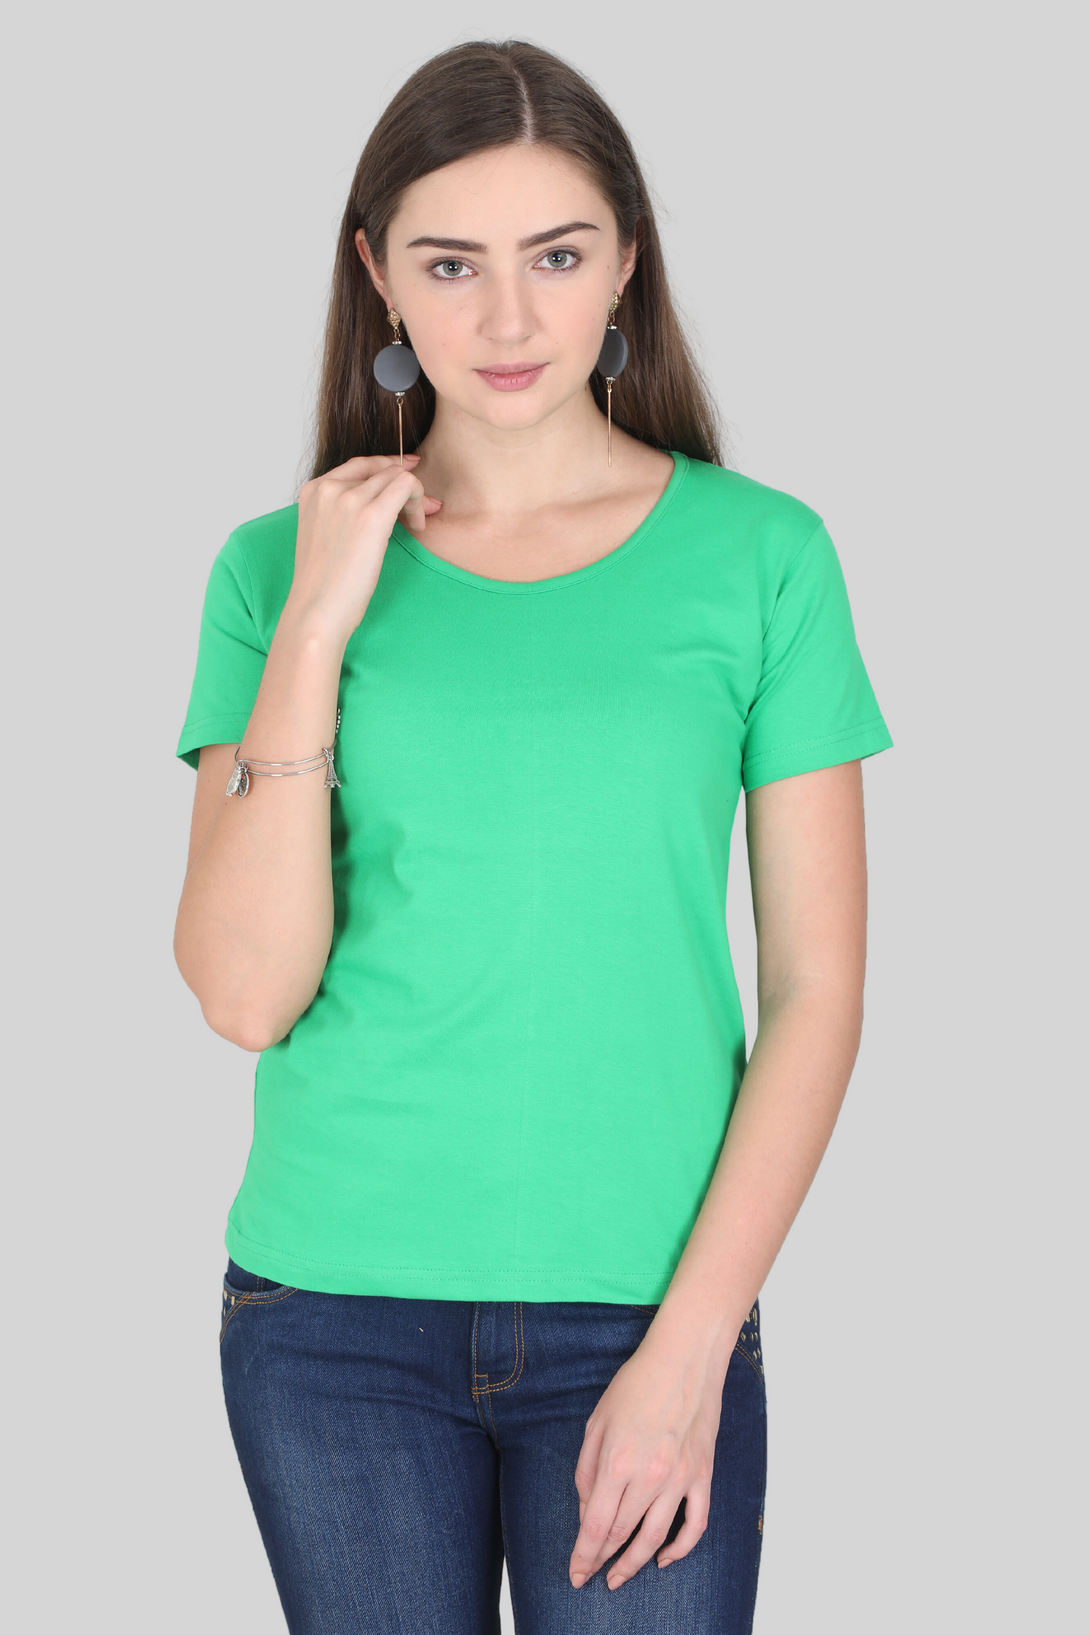 Flag Green Scoop Neck T-Shirt For Women - WowWaves - 1